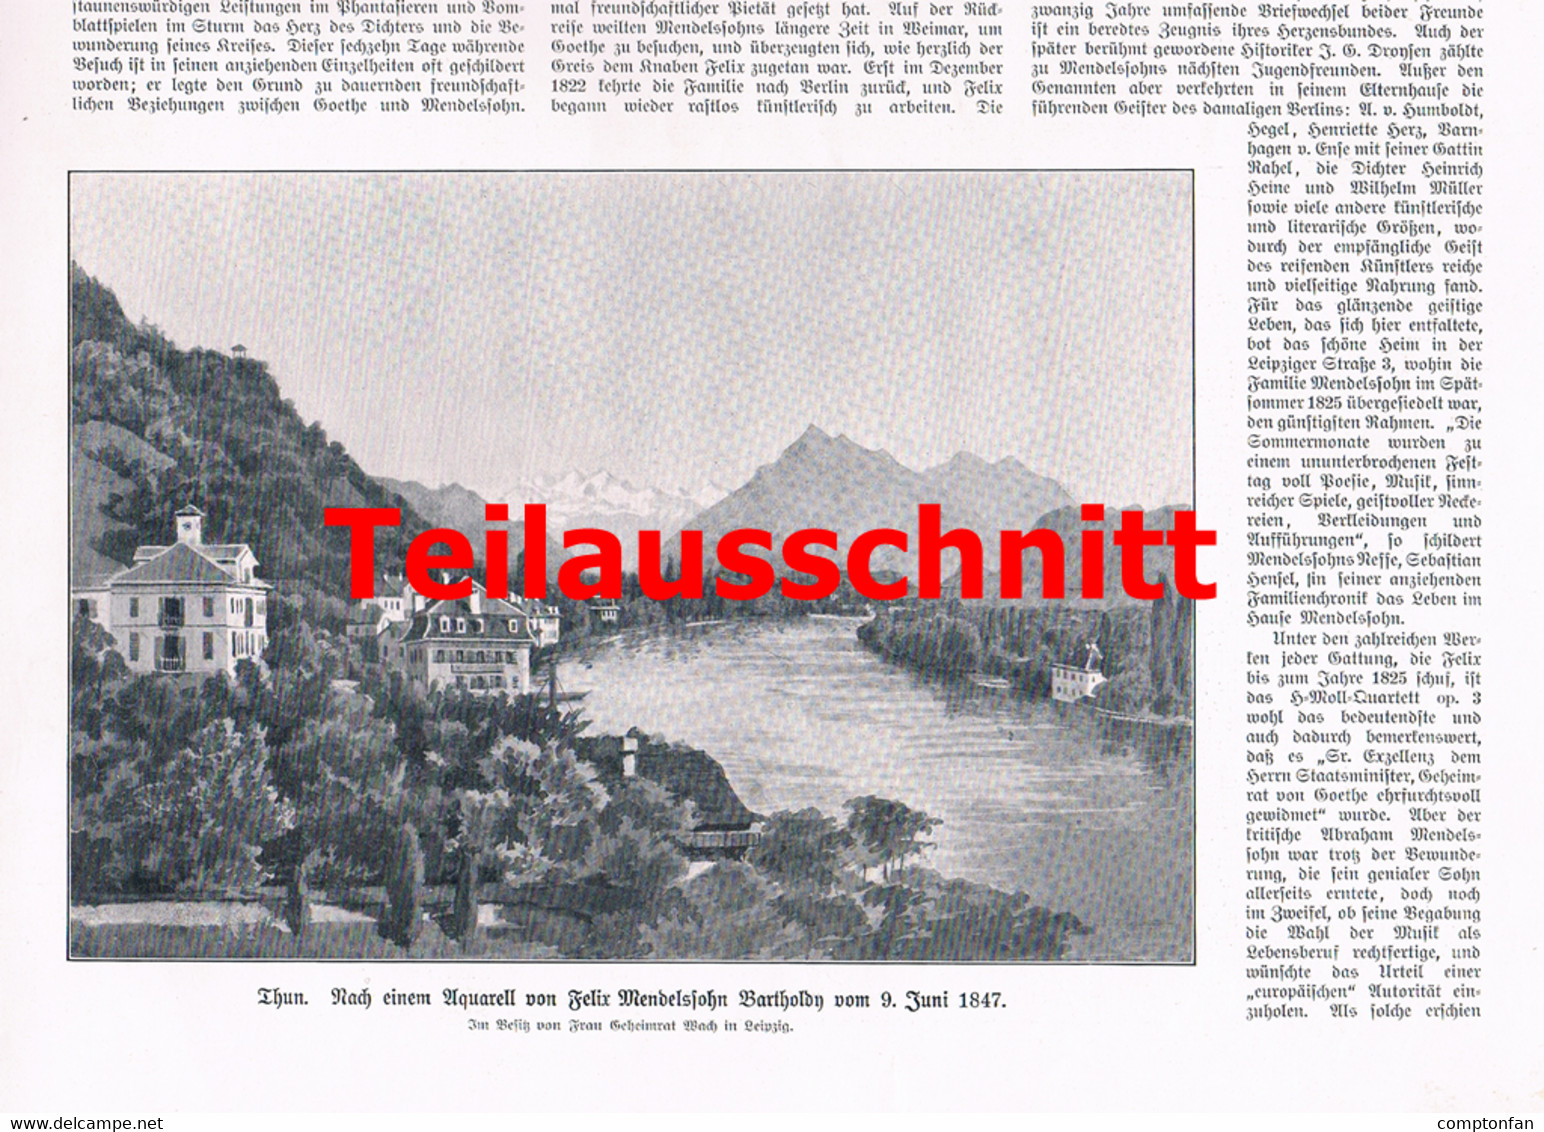 A102 058 - - Felix Mendelssohn Bartholdy Artikel Mit Bildern Großbild 27 X 38 Cm Druck 1909 - Music